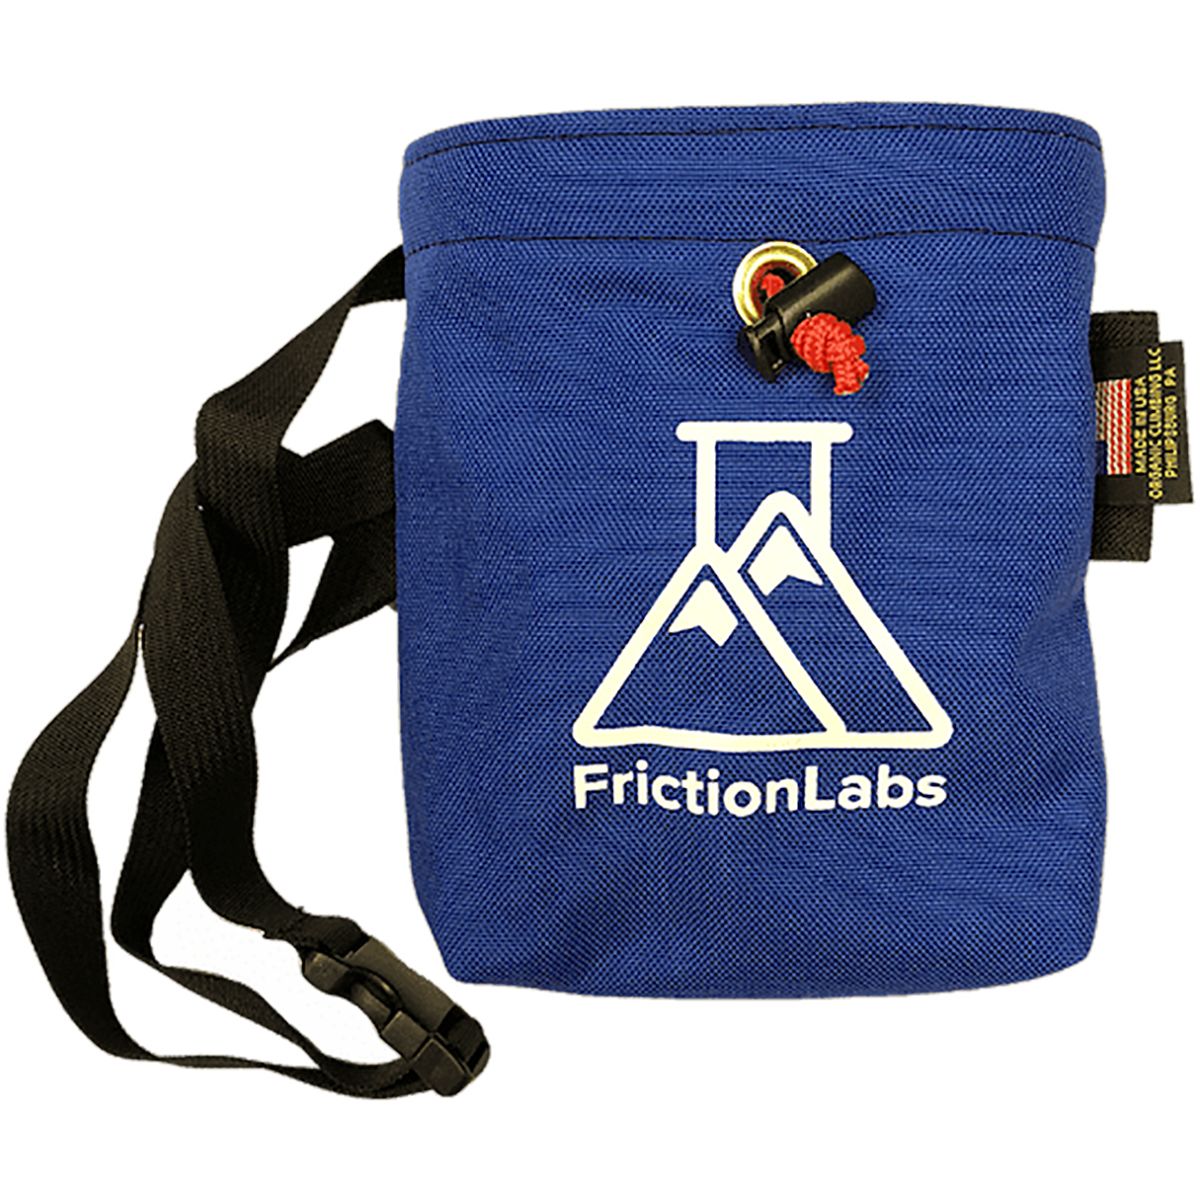 Friction Labs Chalk Bag